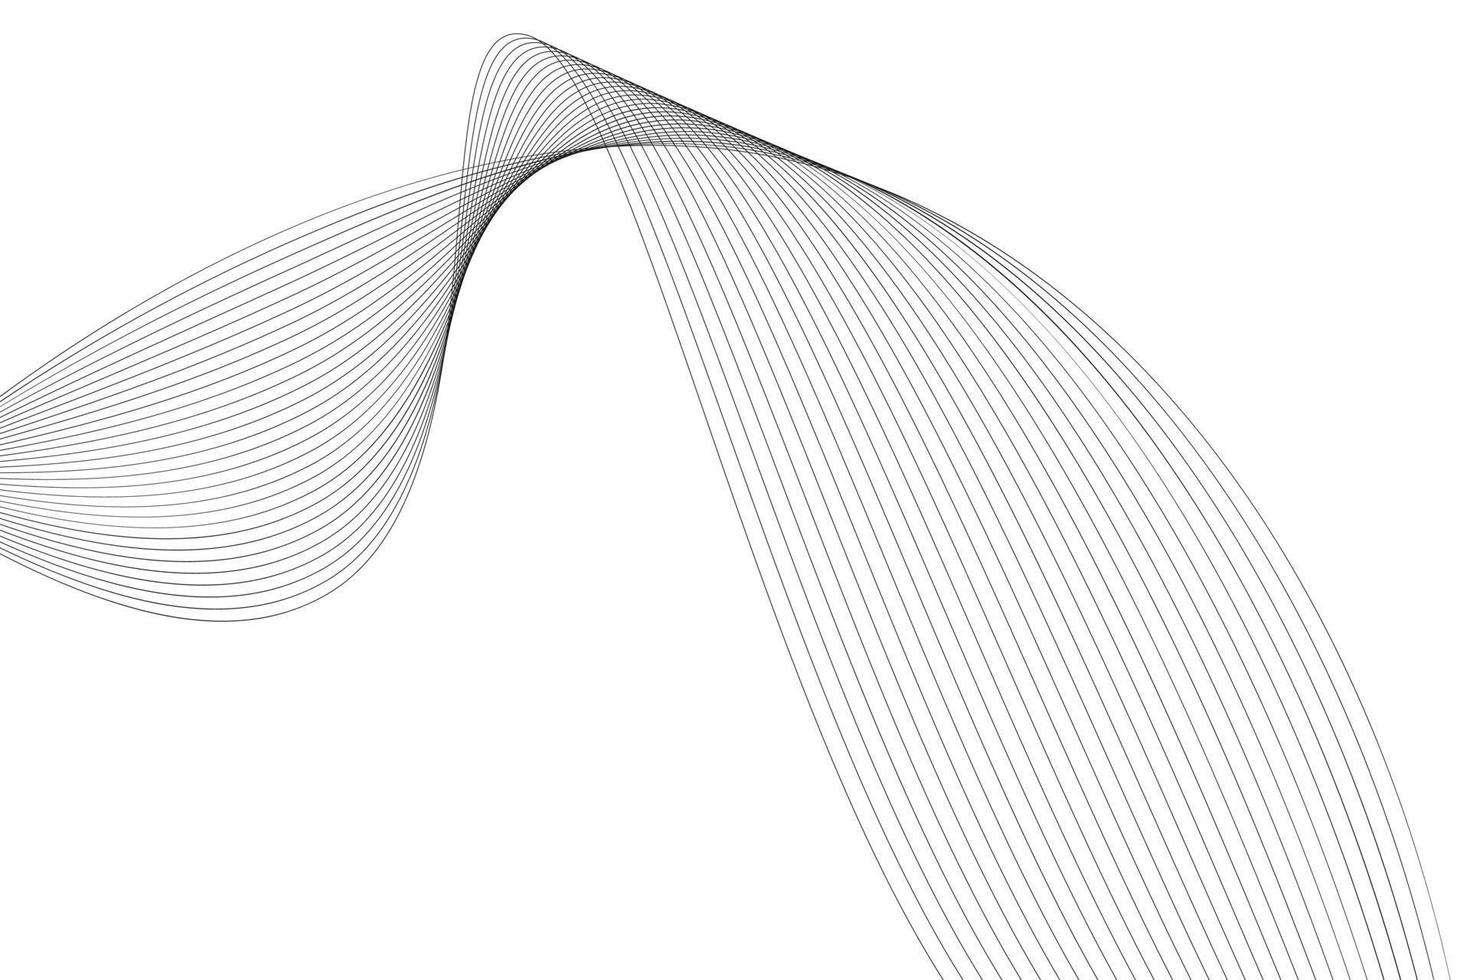 abstrato com fundo branco de linhas onduladas. design de fundo gradiente abstrato vetor